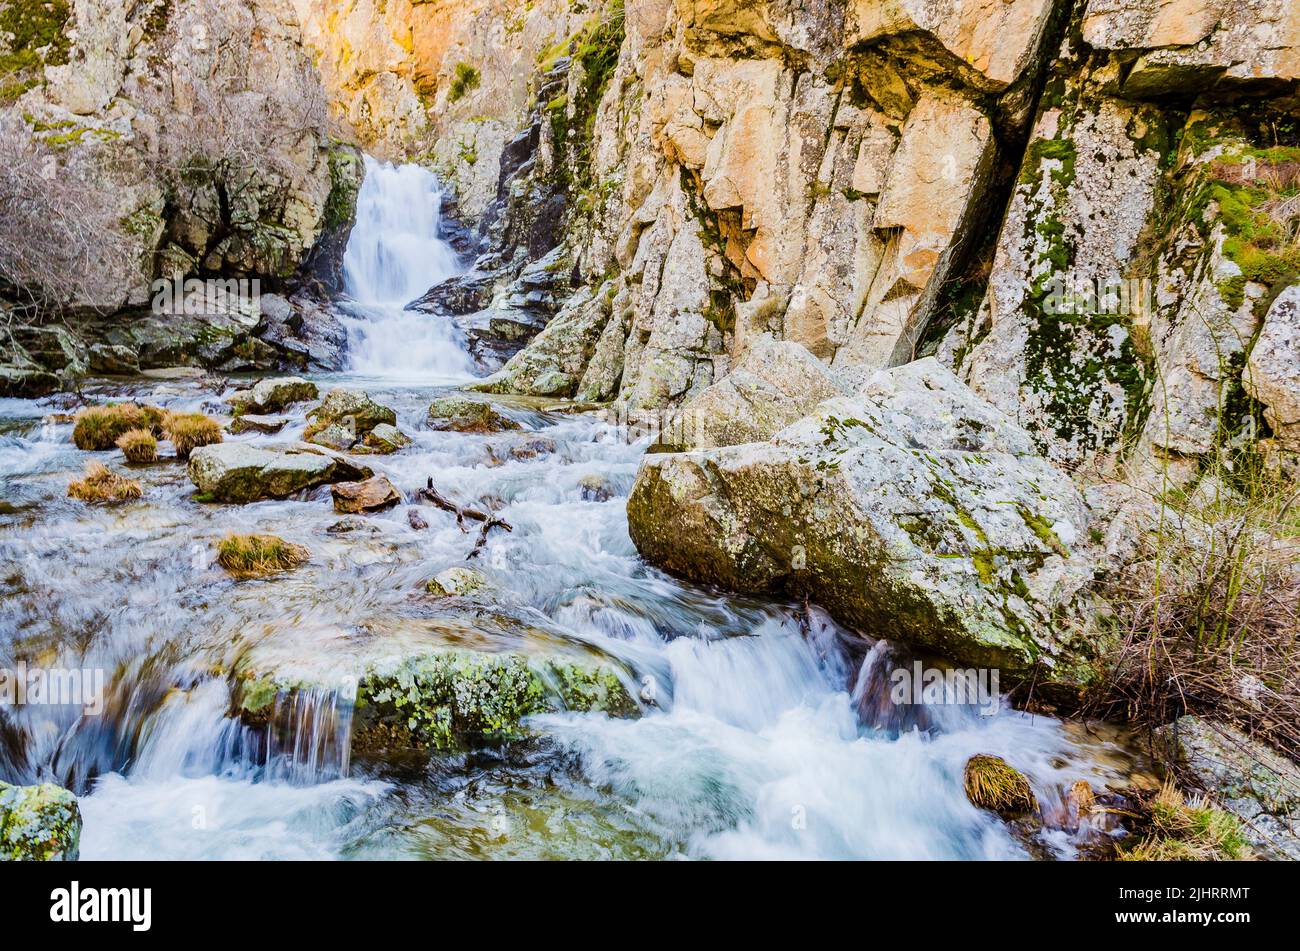 Cascadas del Purgatorio - El Purgatorio falls. Near the Sierra de Guadarrama National Park. Rascafría, Comunidad de Madrid, Spain, Europe Stock Photo